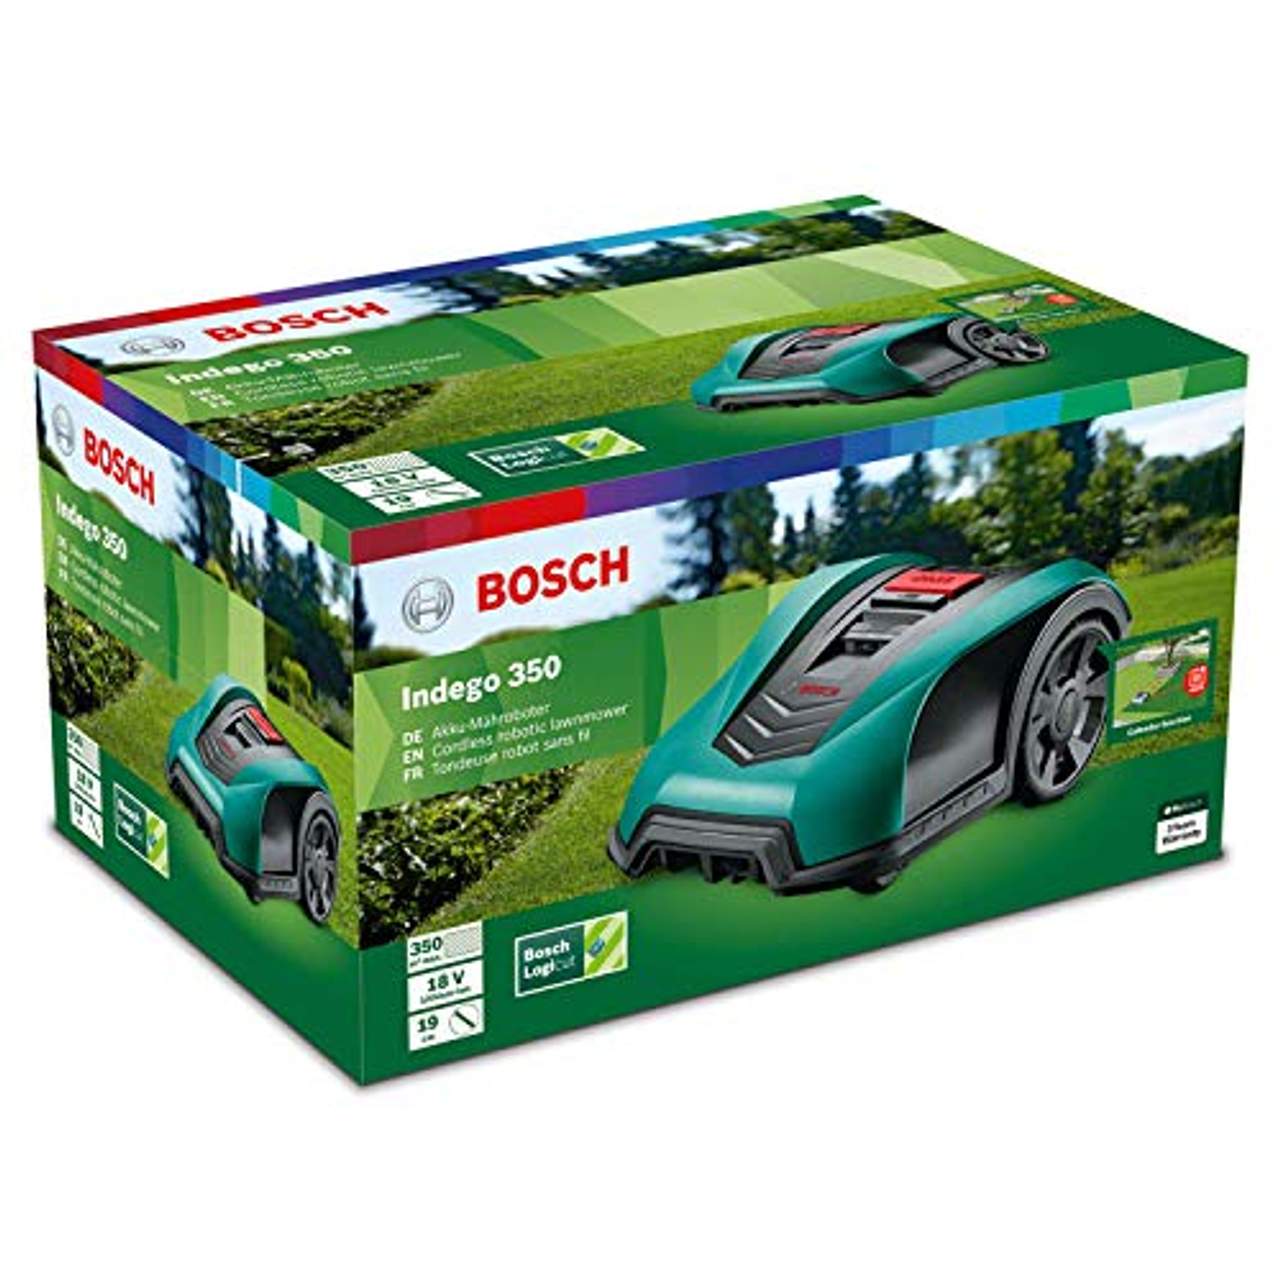 Bosch Mähroboter Indego 350